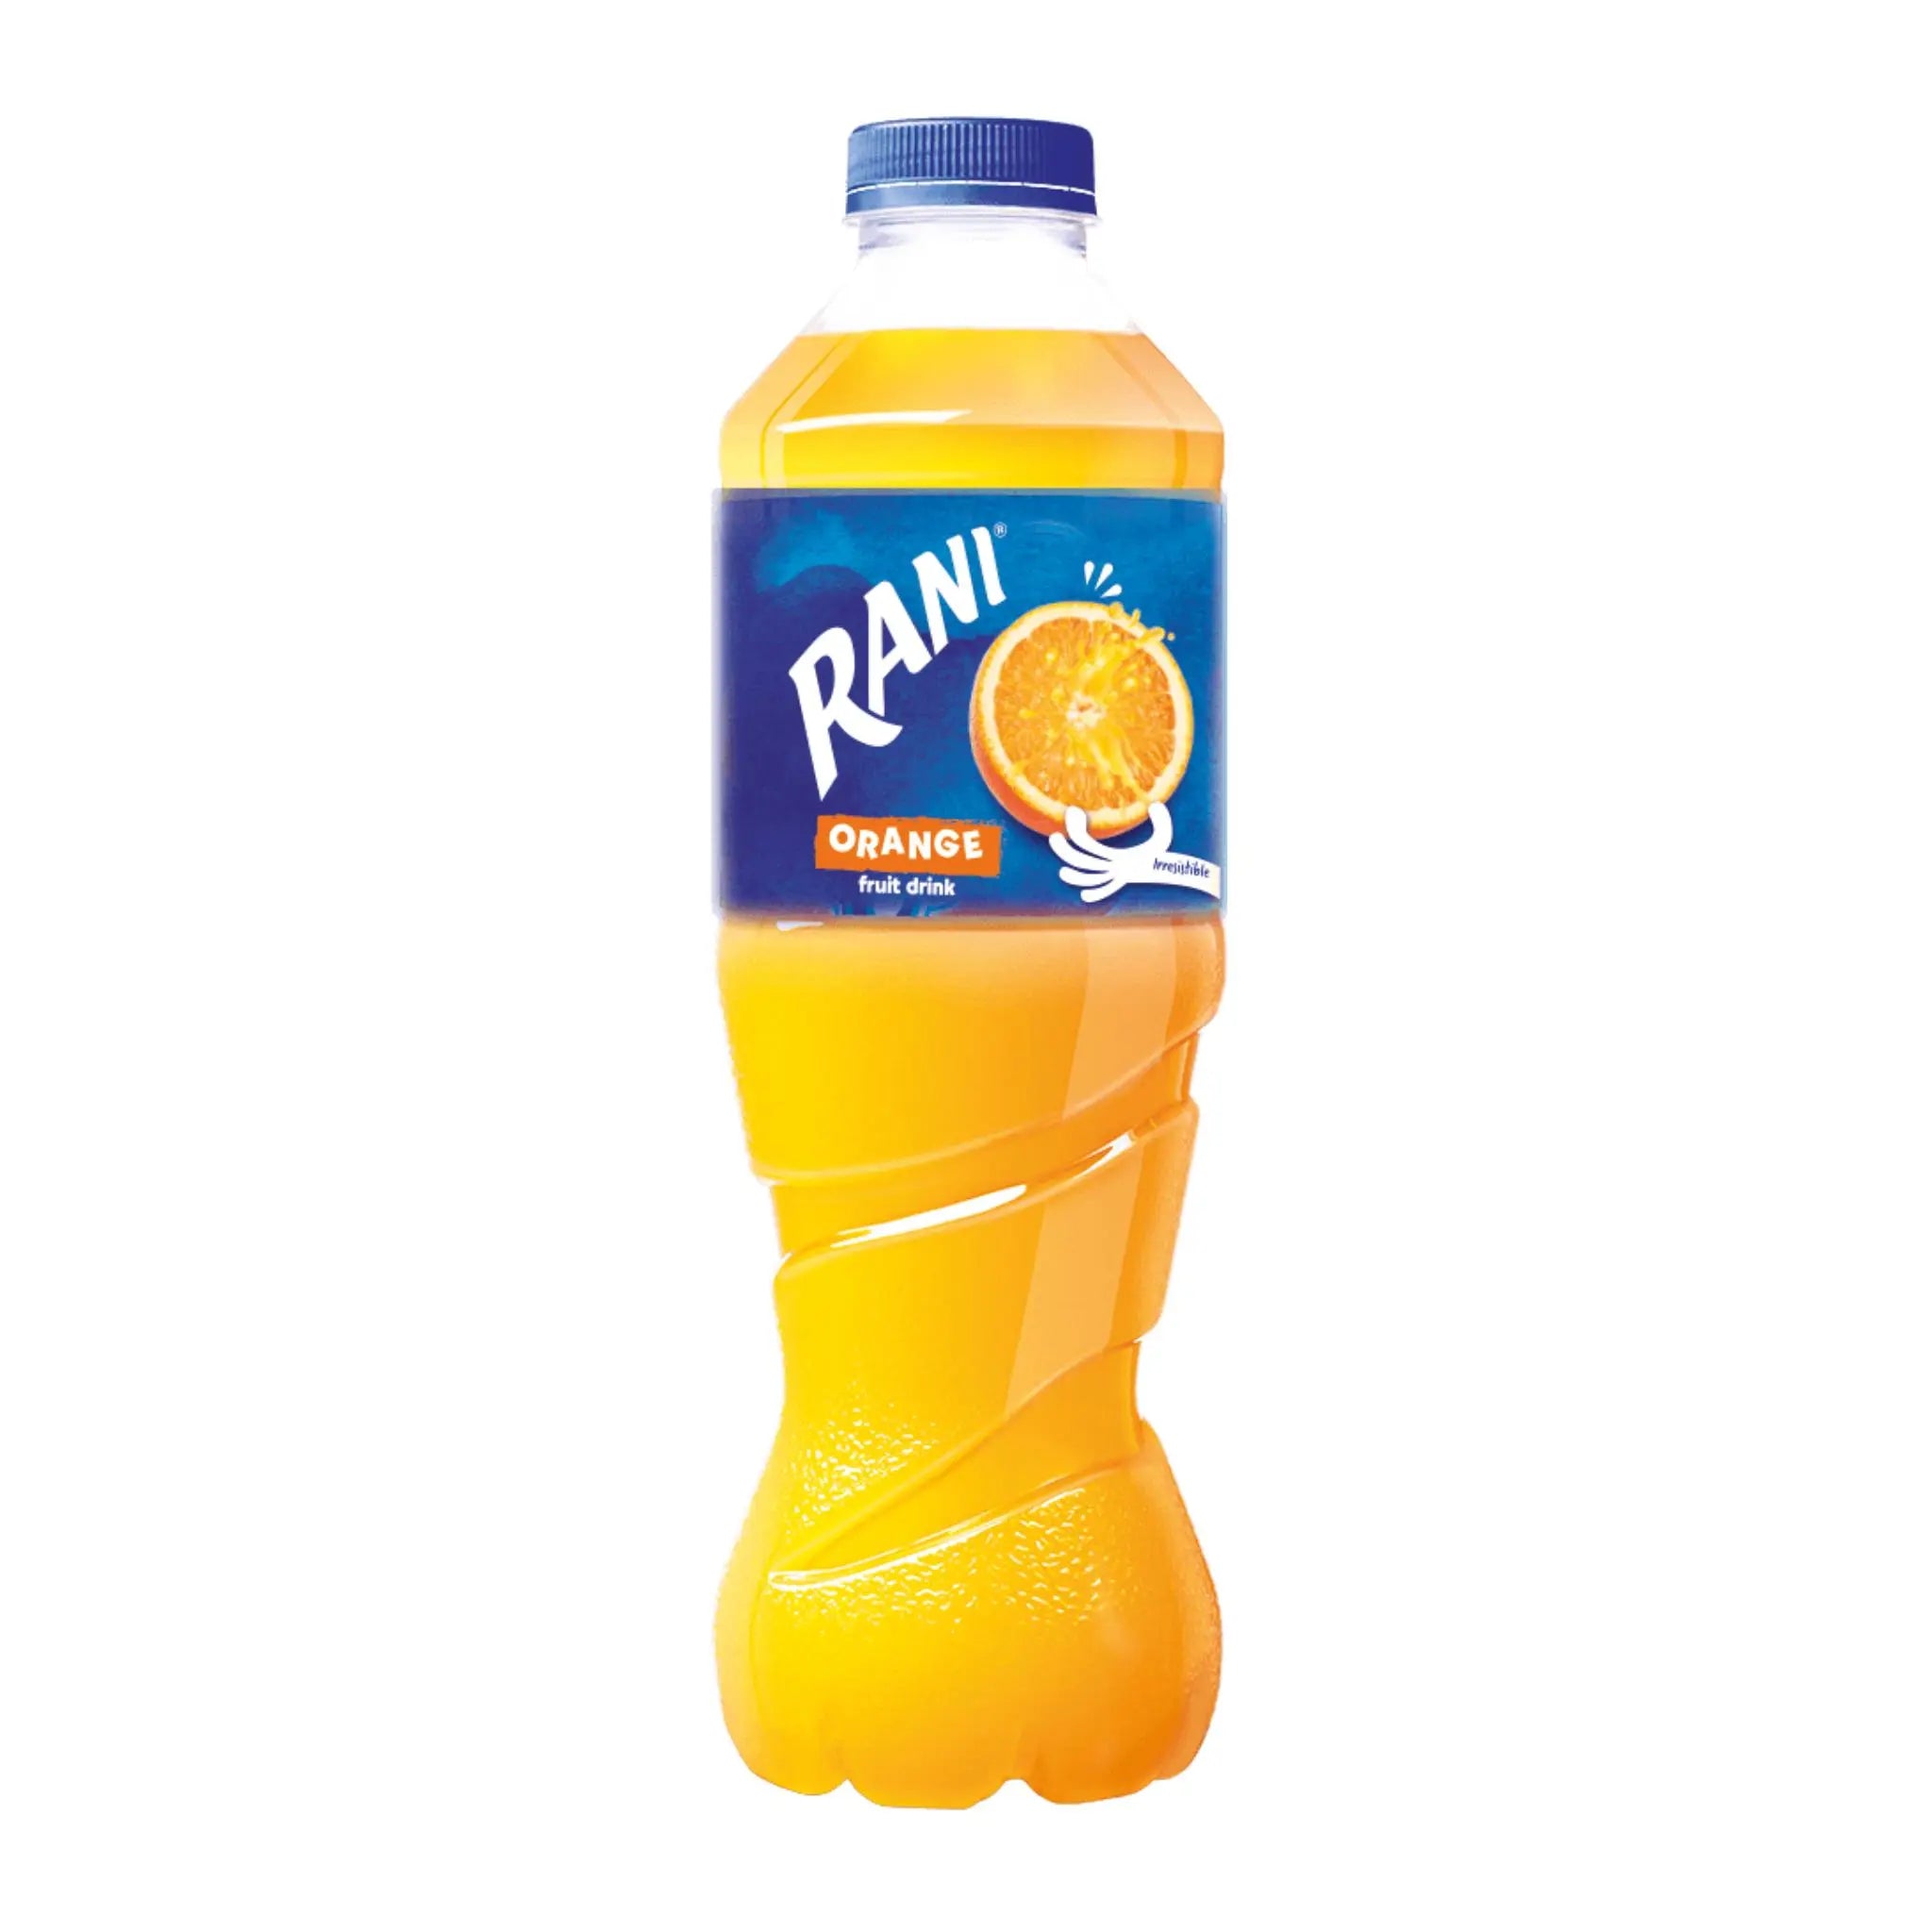 Rani Fruit Drink Orange 1.5L PET - 6x1.5L (1 carton) Marino.AE